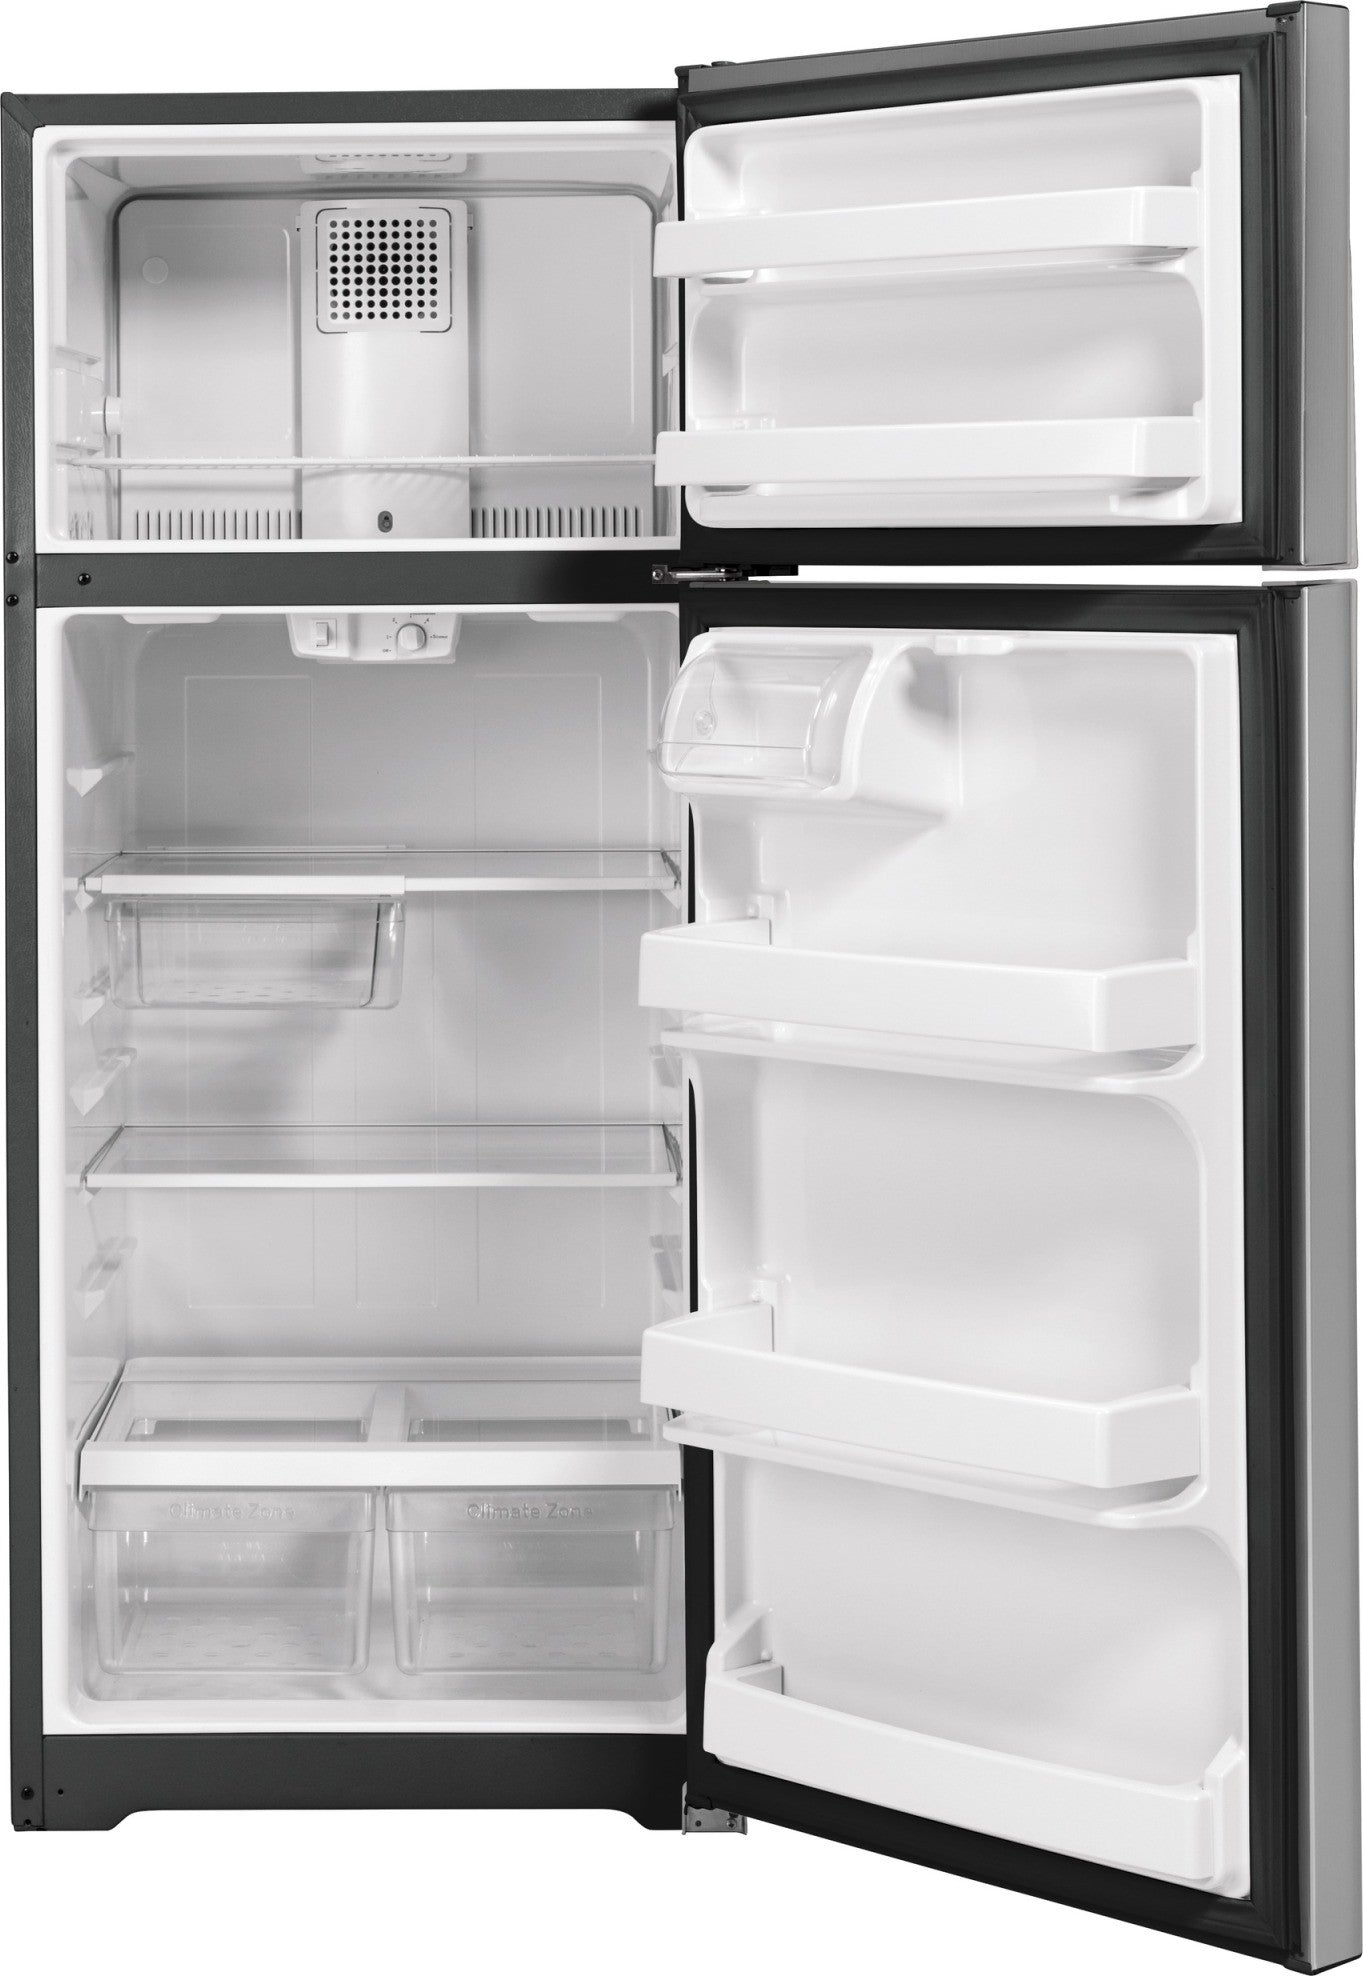 GE Appliances GTS18GSNRSS Top-Freezer Refrigerator 17.5 Cu. Ft with 1-Year Warranty